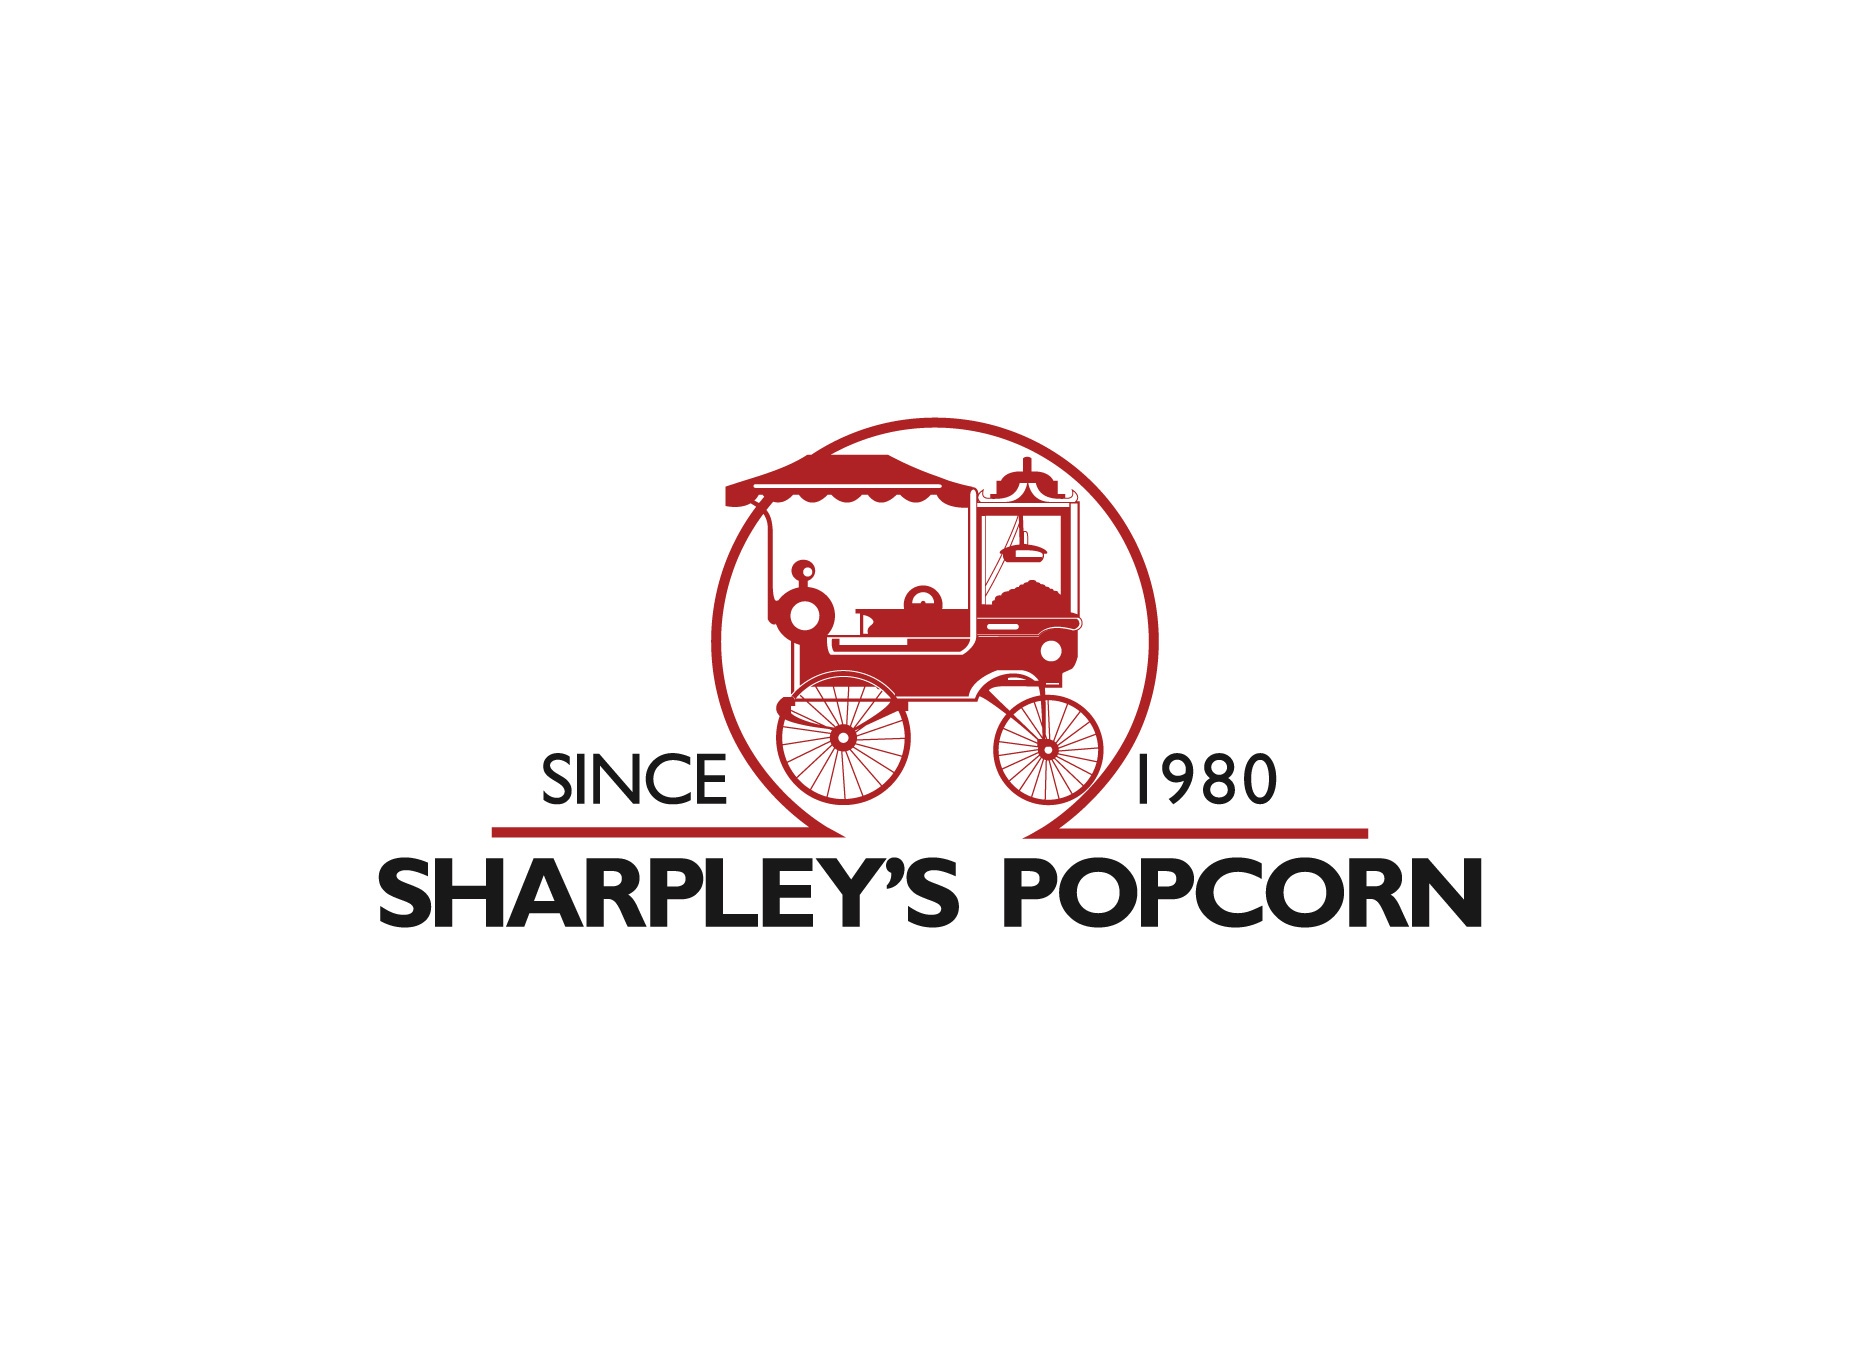 Sharpley's Popcorn